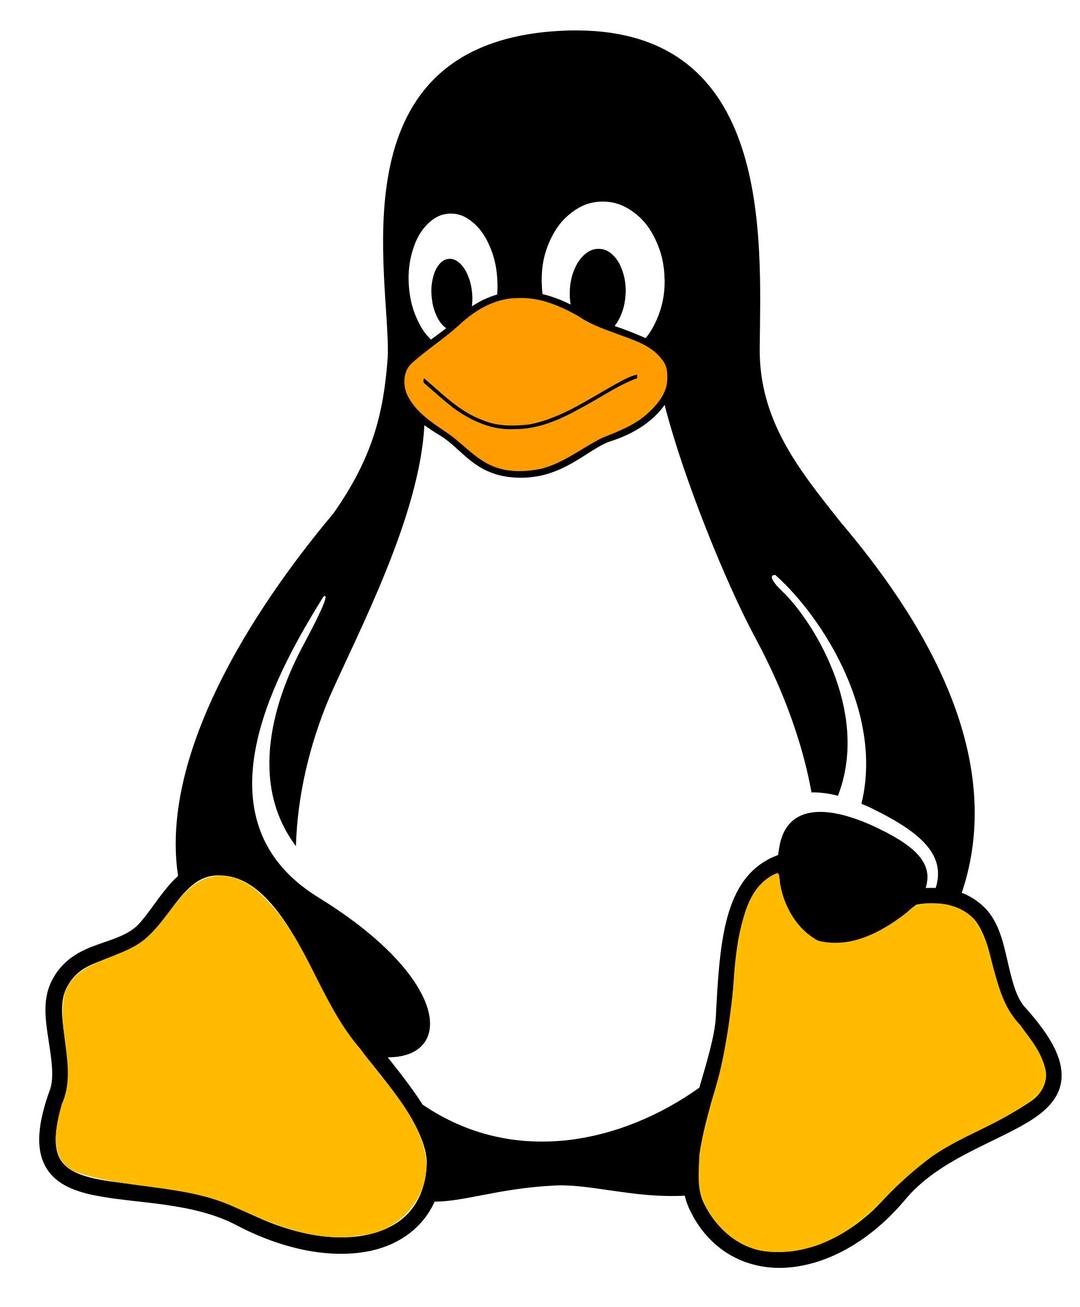 Linux Pinguino png transparent